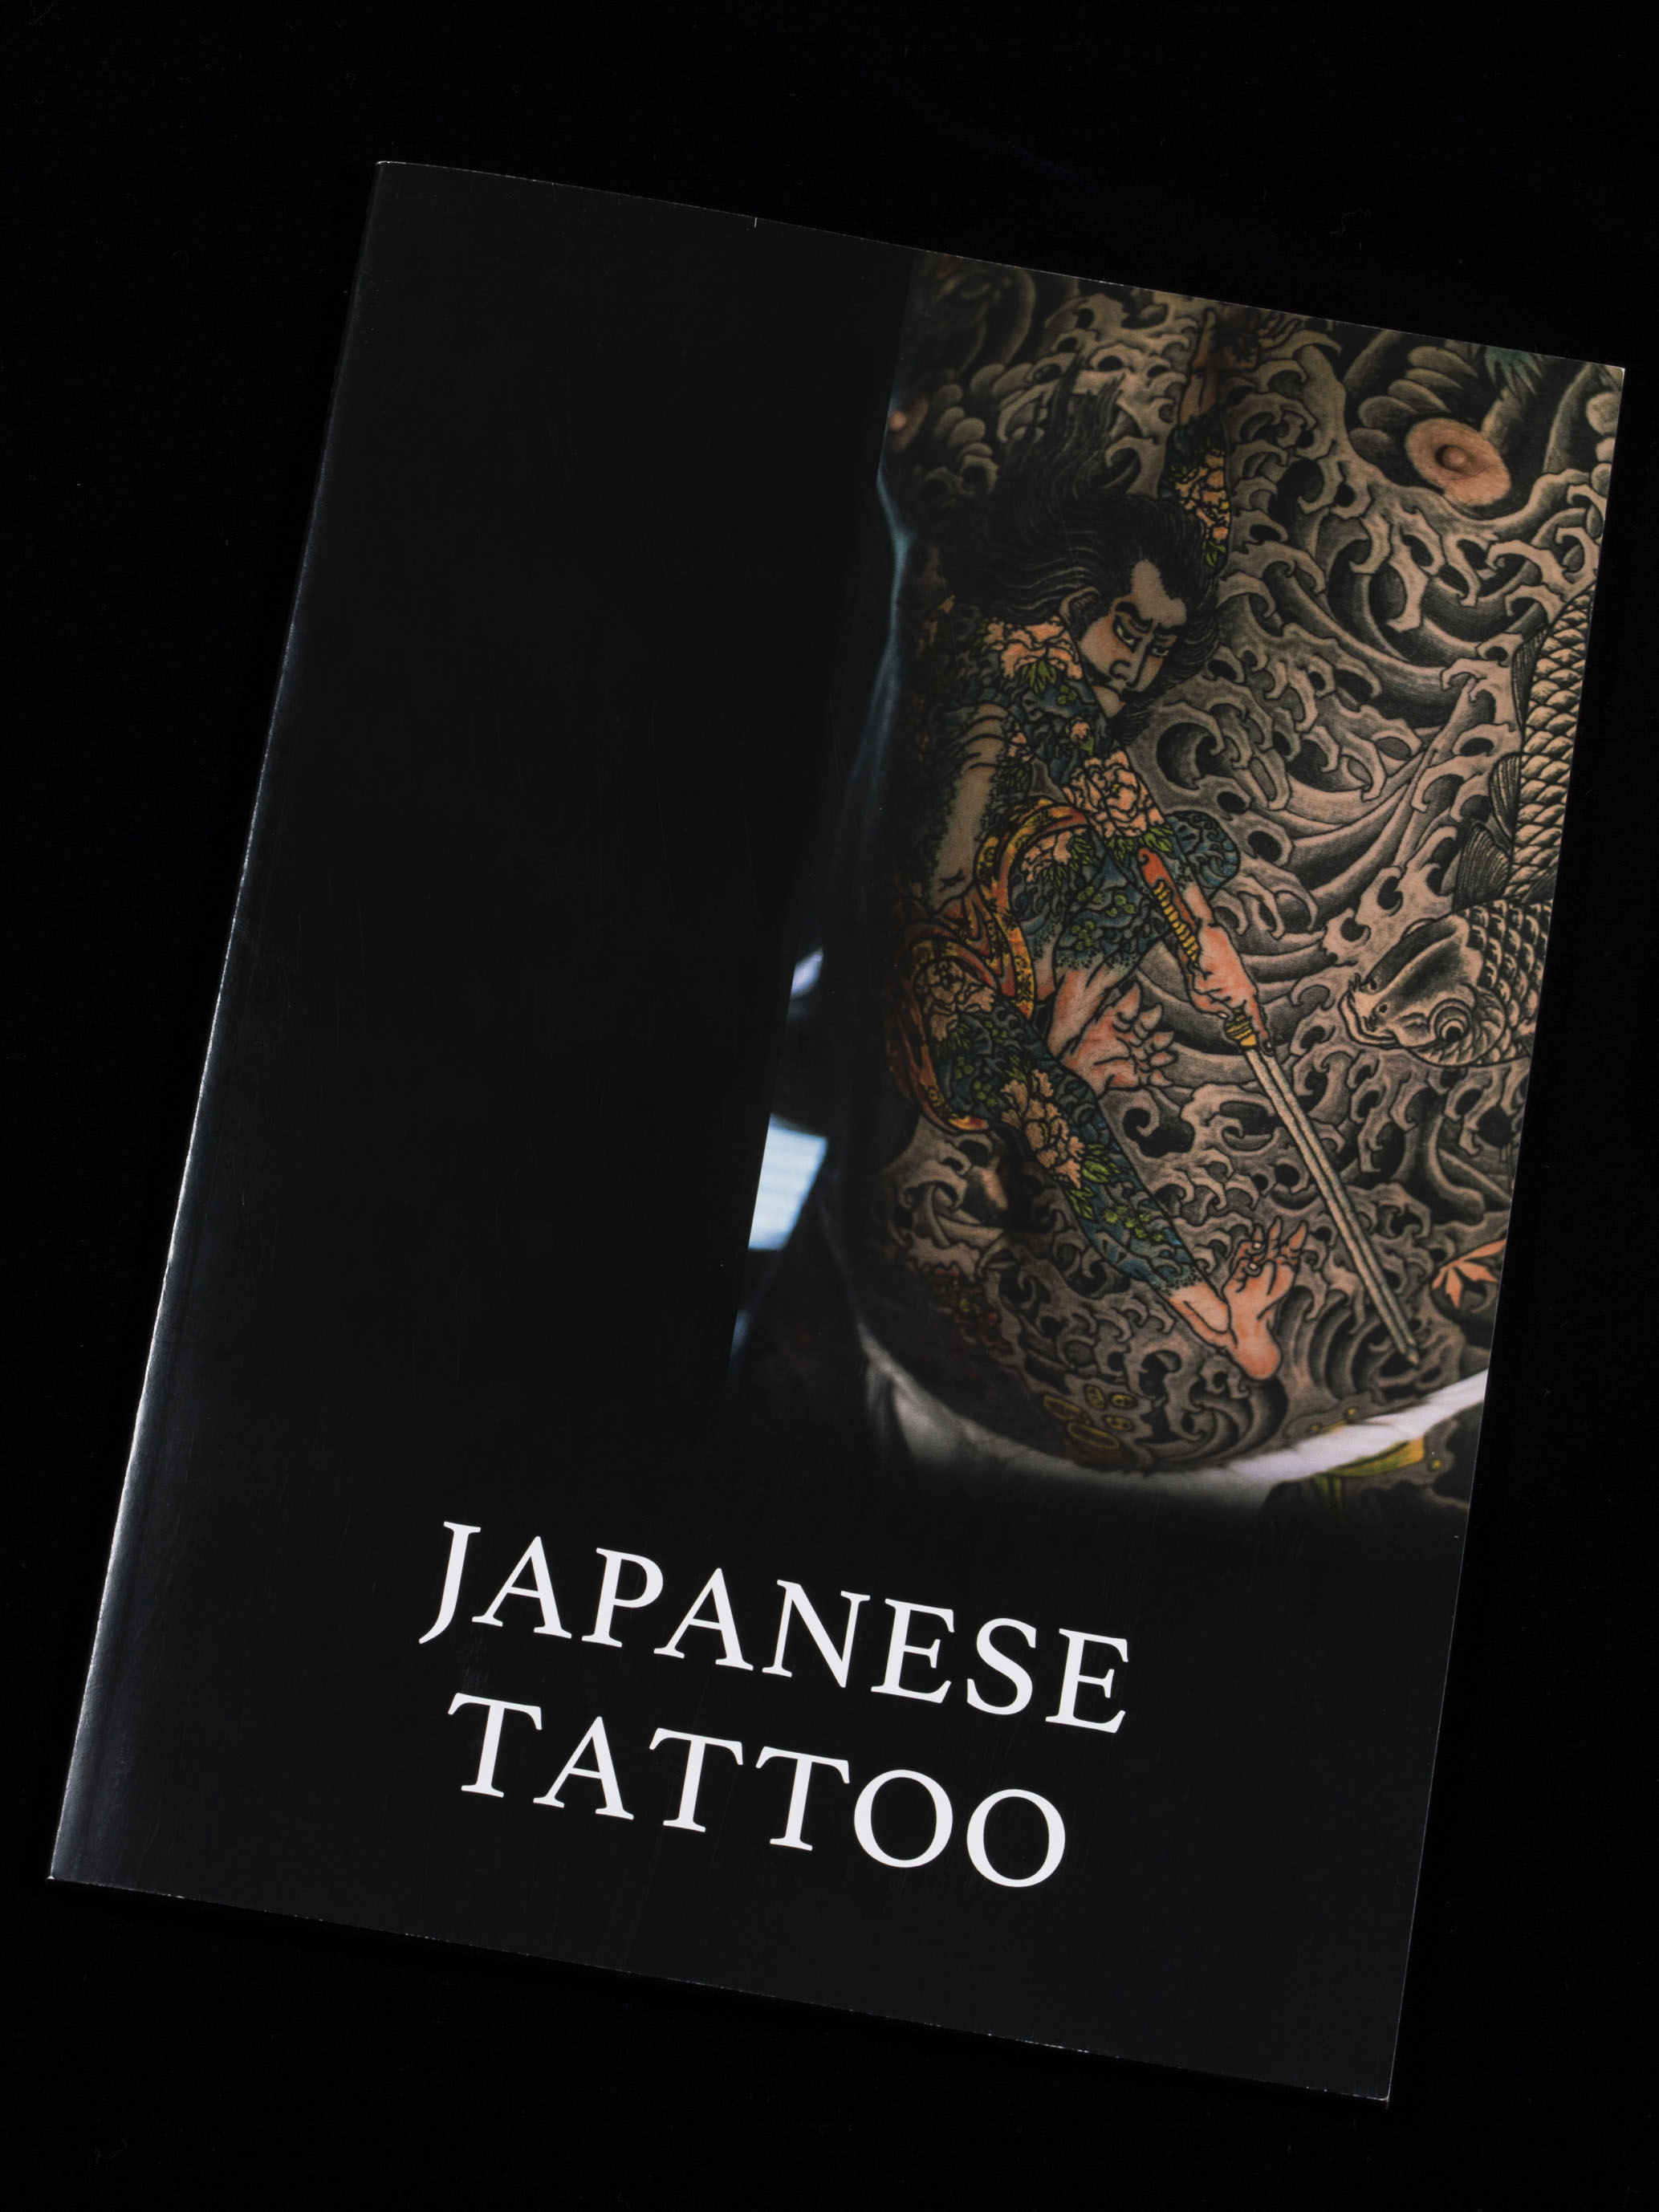 NAZI 骸骨名誉ウォレットチェーン、NAZIキーパー、そして日本伝統刺青 写真集をアップしました。